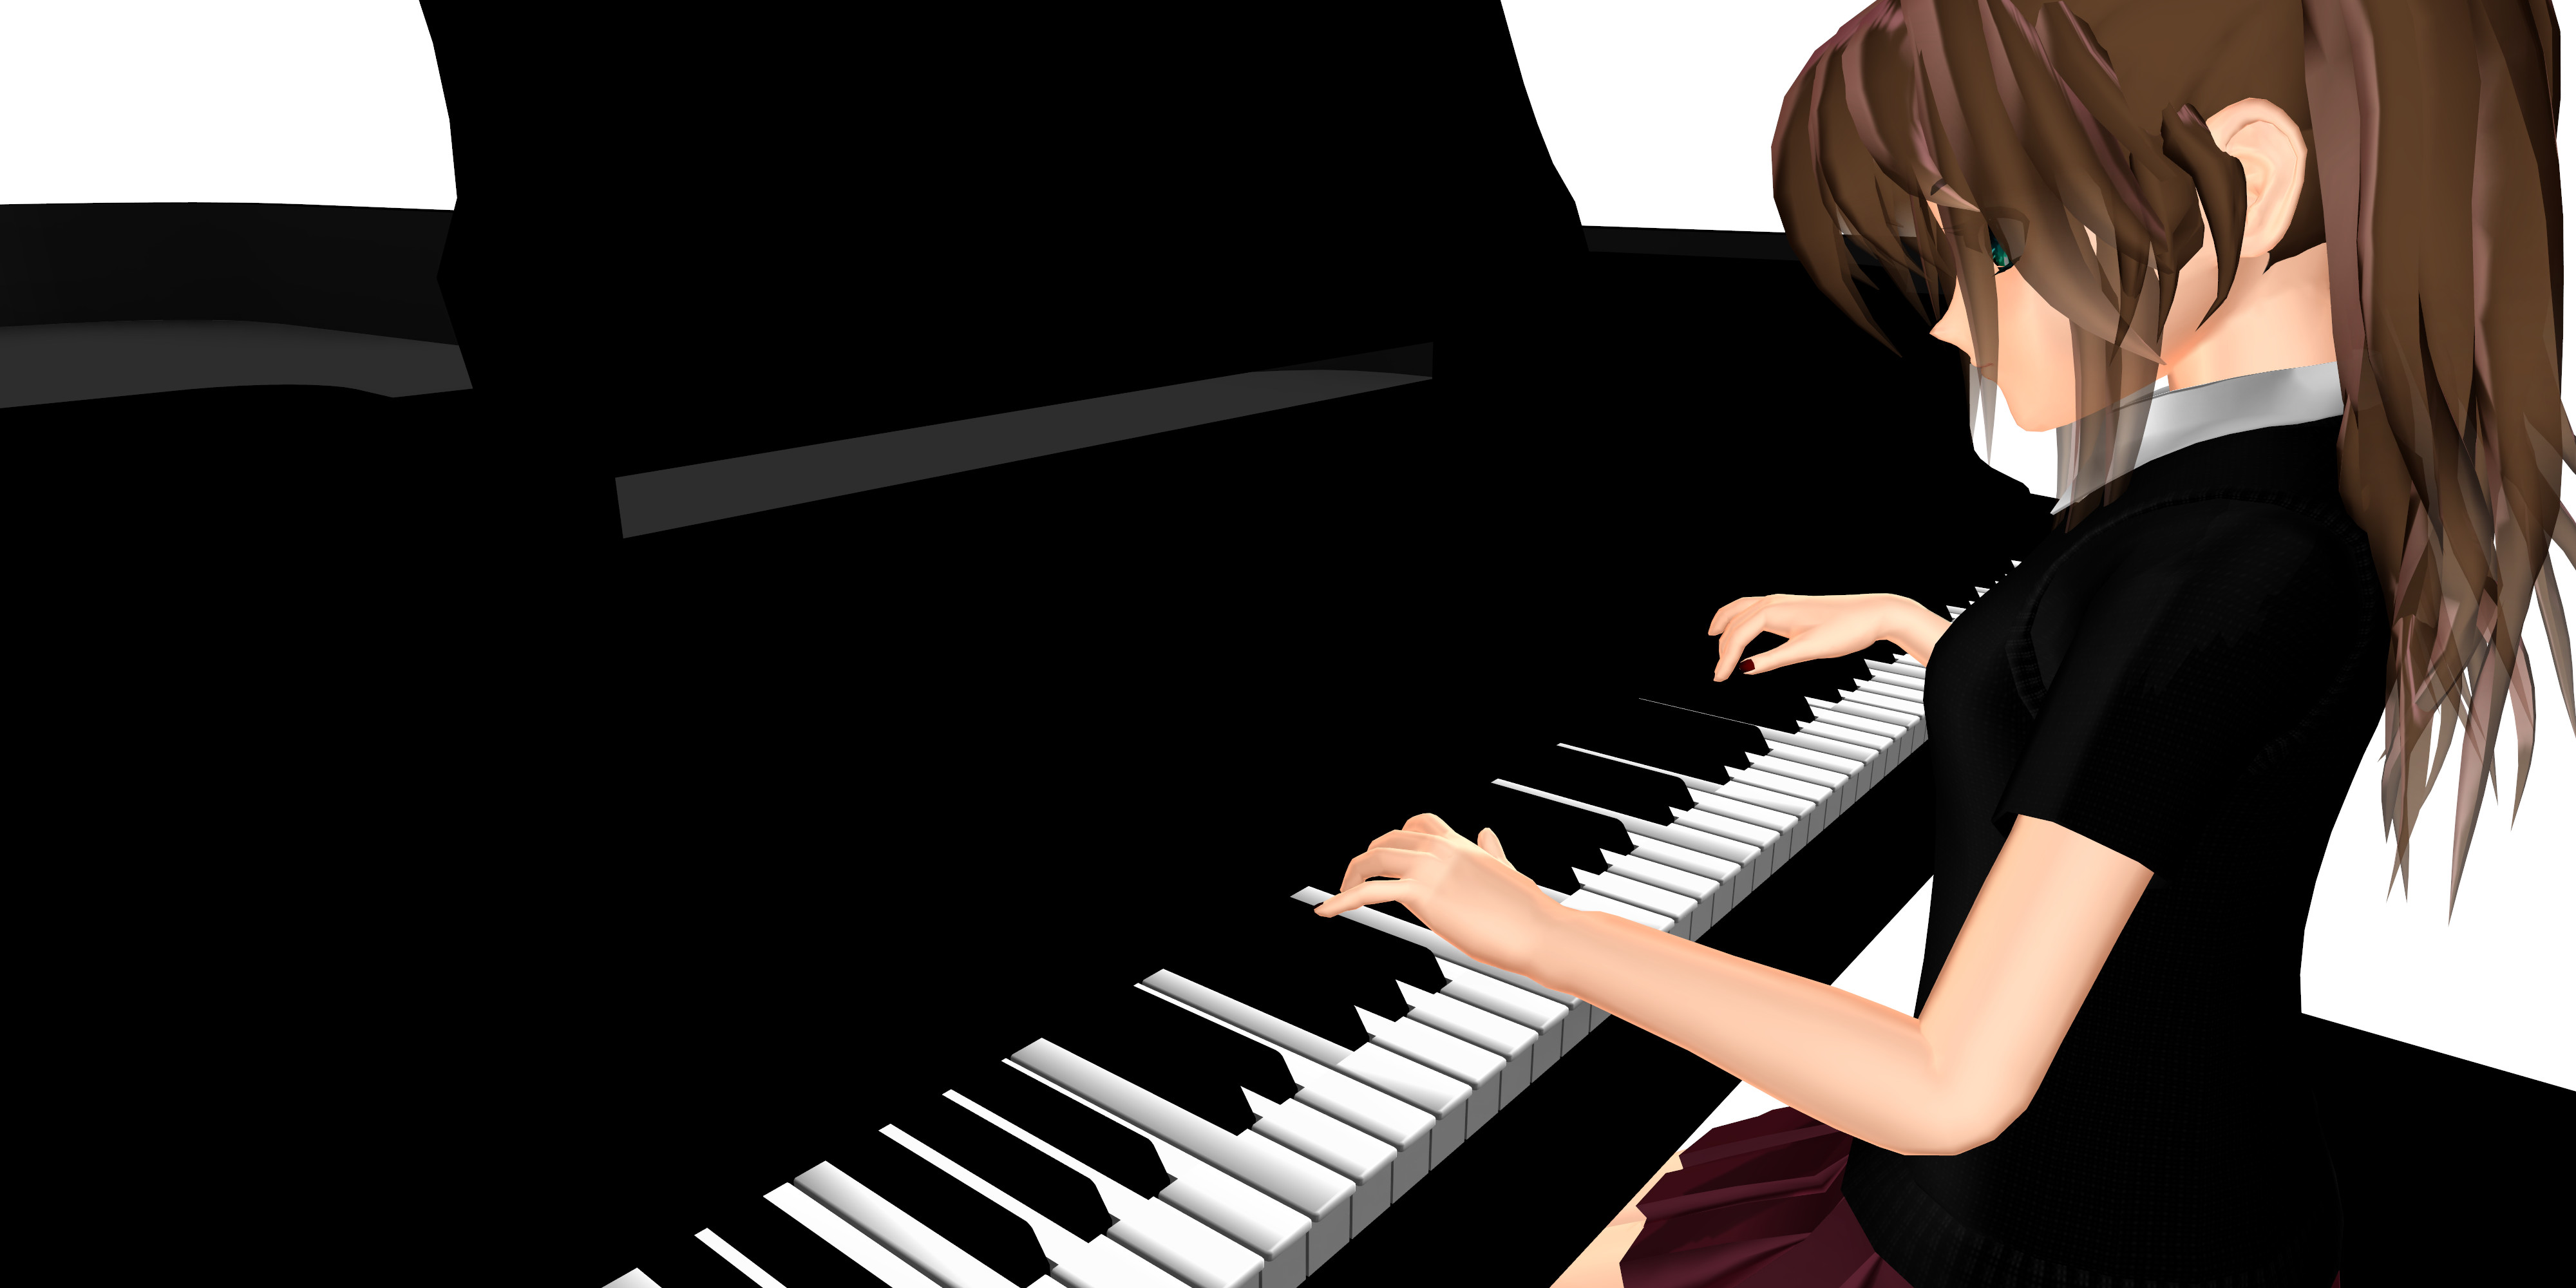 Девушка на клавишах арт. Человек играющий на синтезаторе арт. Игра на белом рояле. Игра на пианино арт.